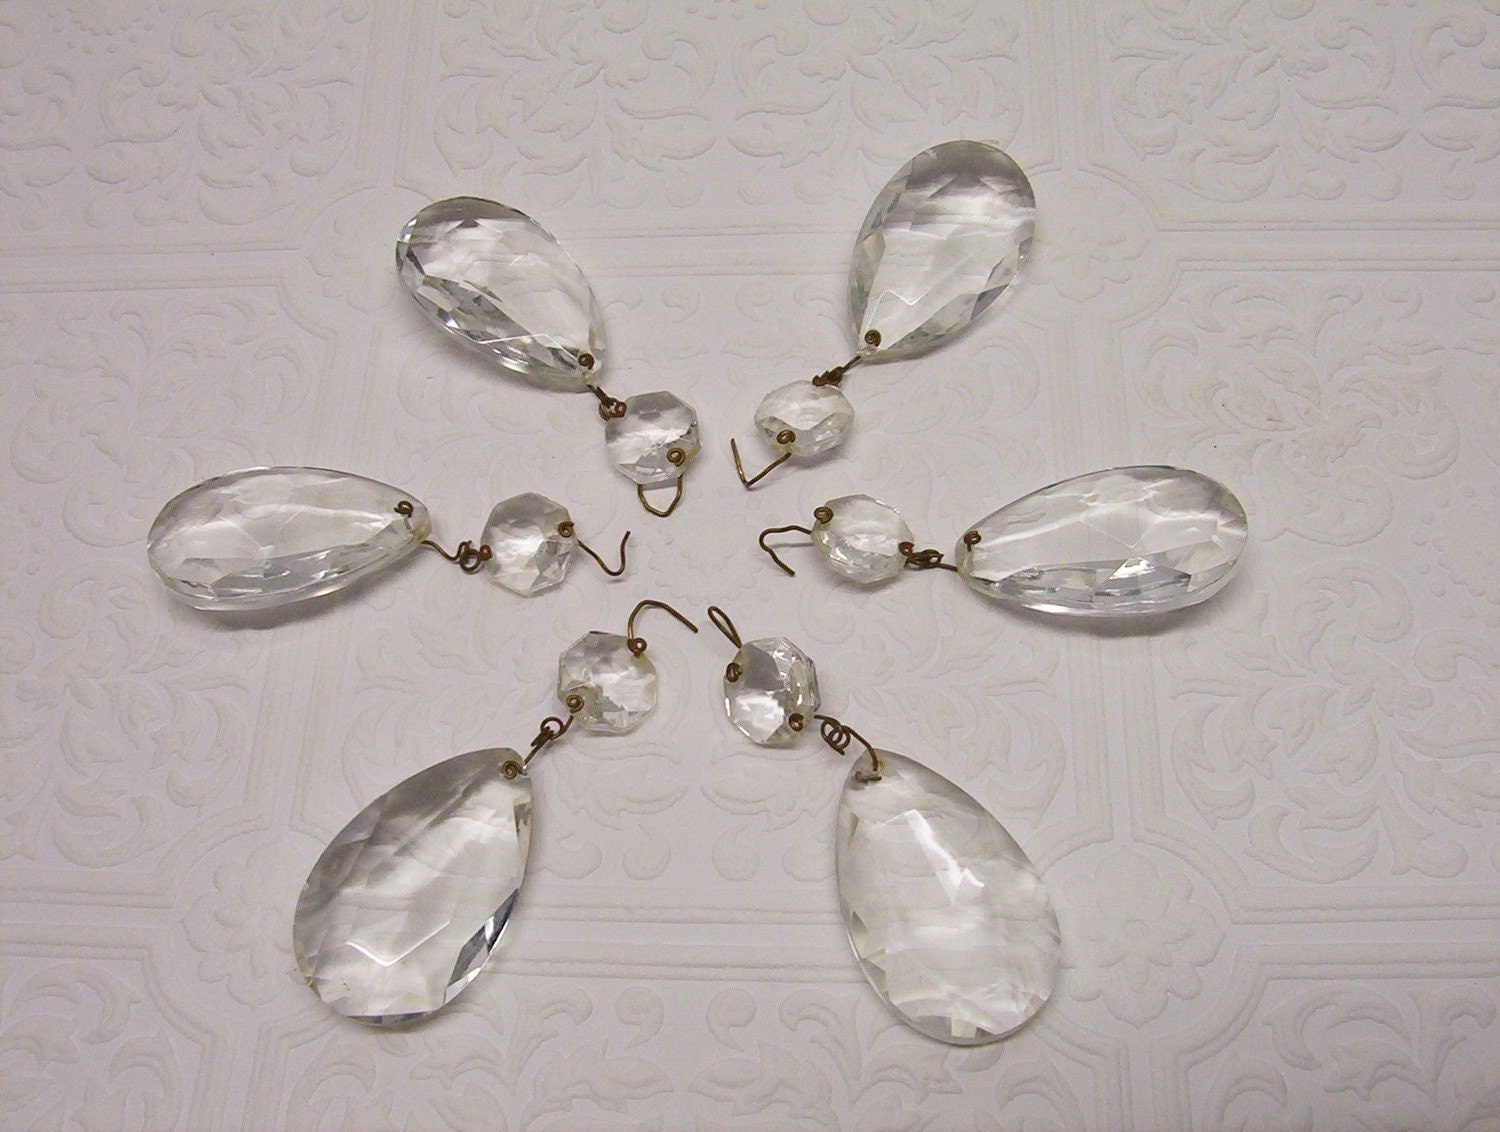 Vintage Chandelier Crystal Prisms Replacements by ozarksfinds